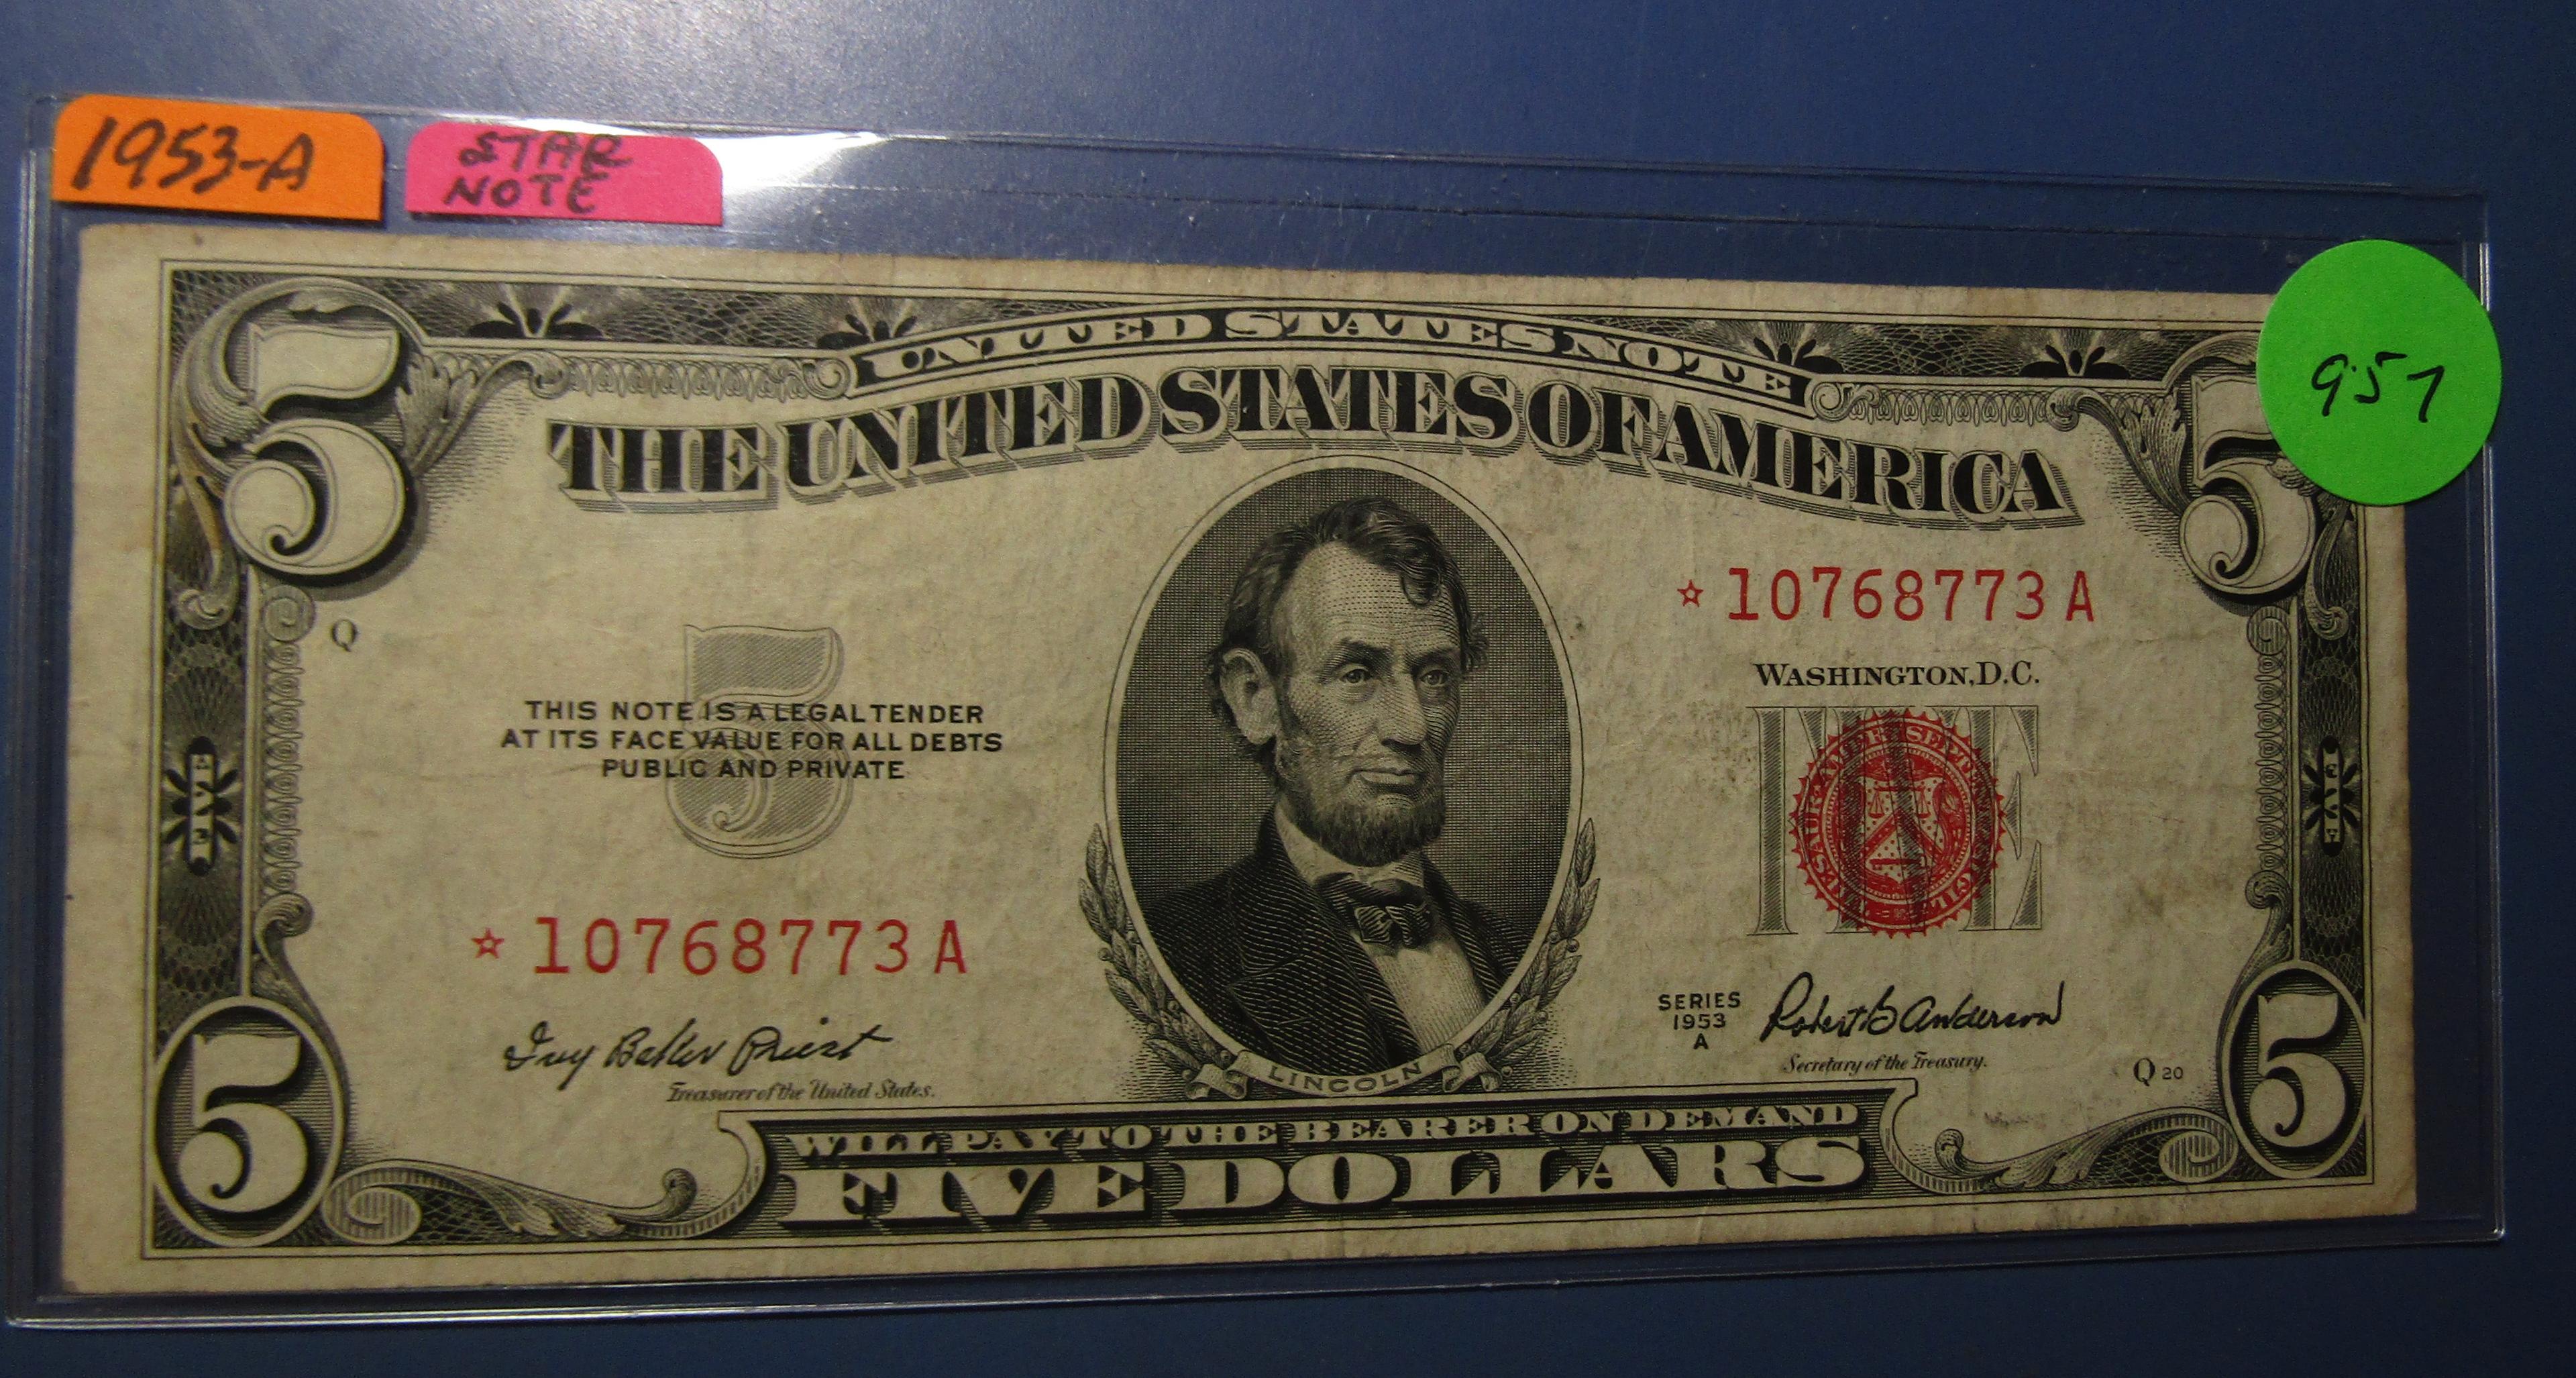 1953-A $5.00 SILVER CERTIFICATE STAR NOTE VF/XF